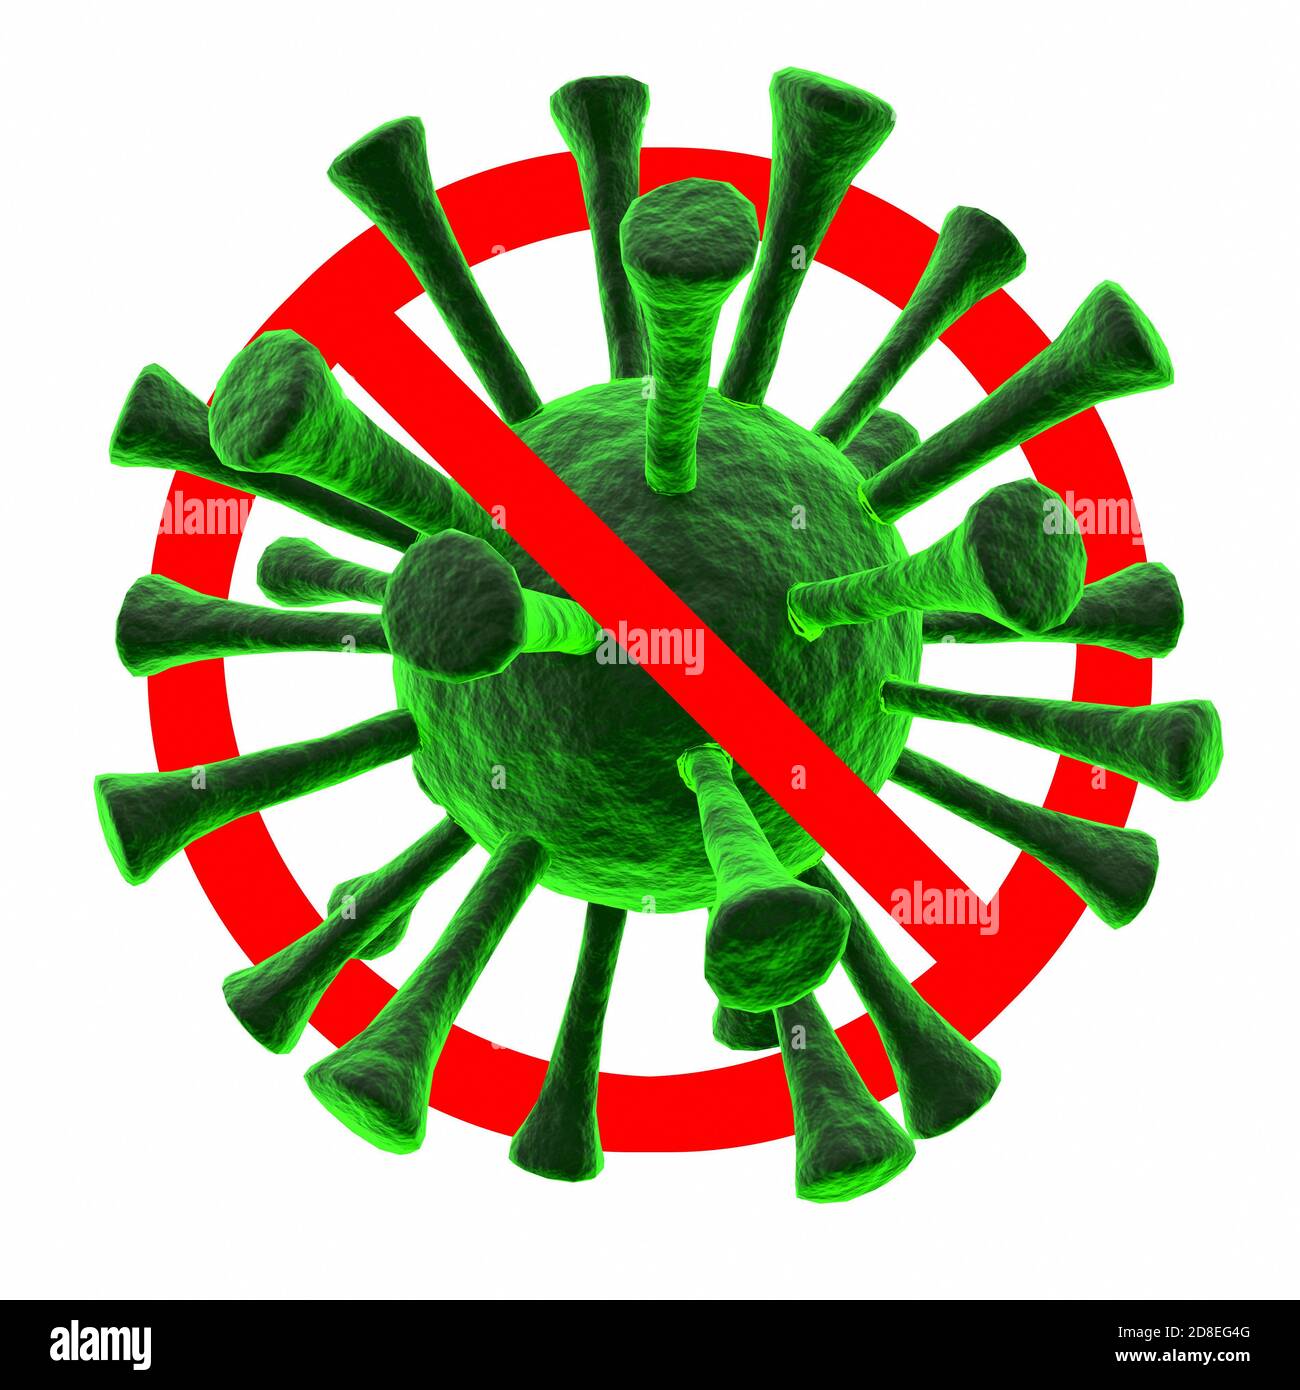 Virus coronavirus covid-19 with stop sign. 3d rendering Stock Photo